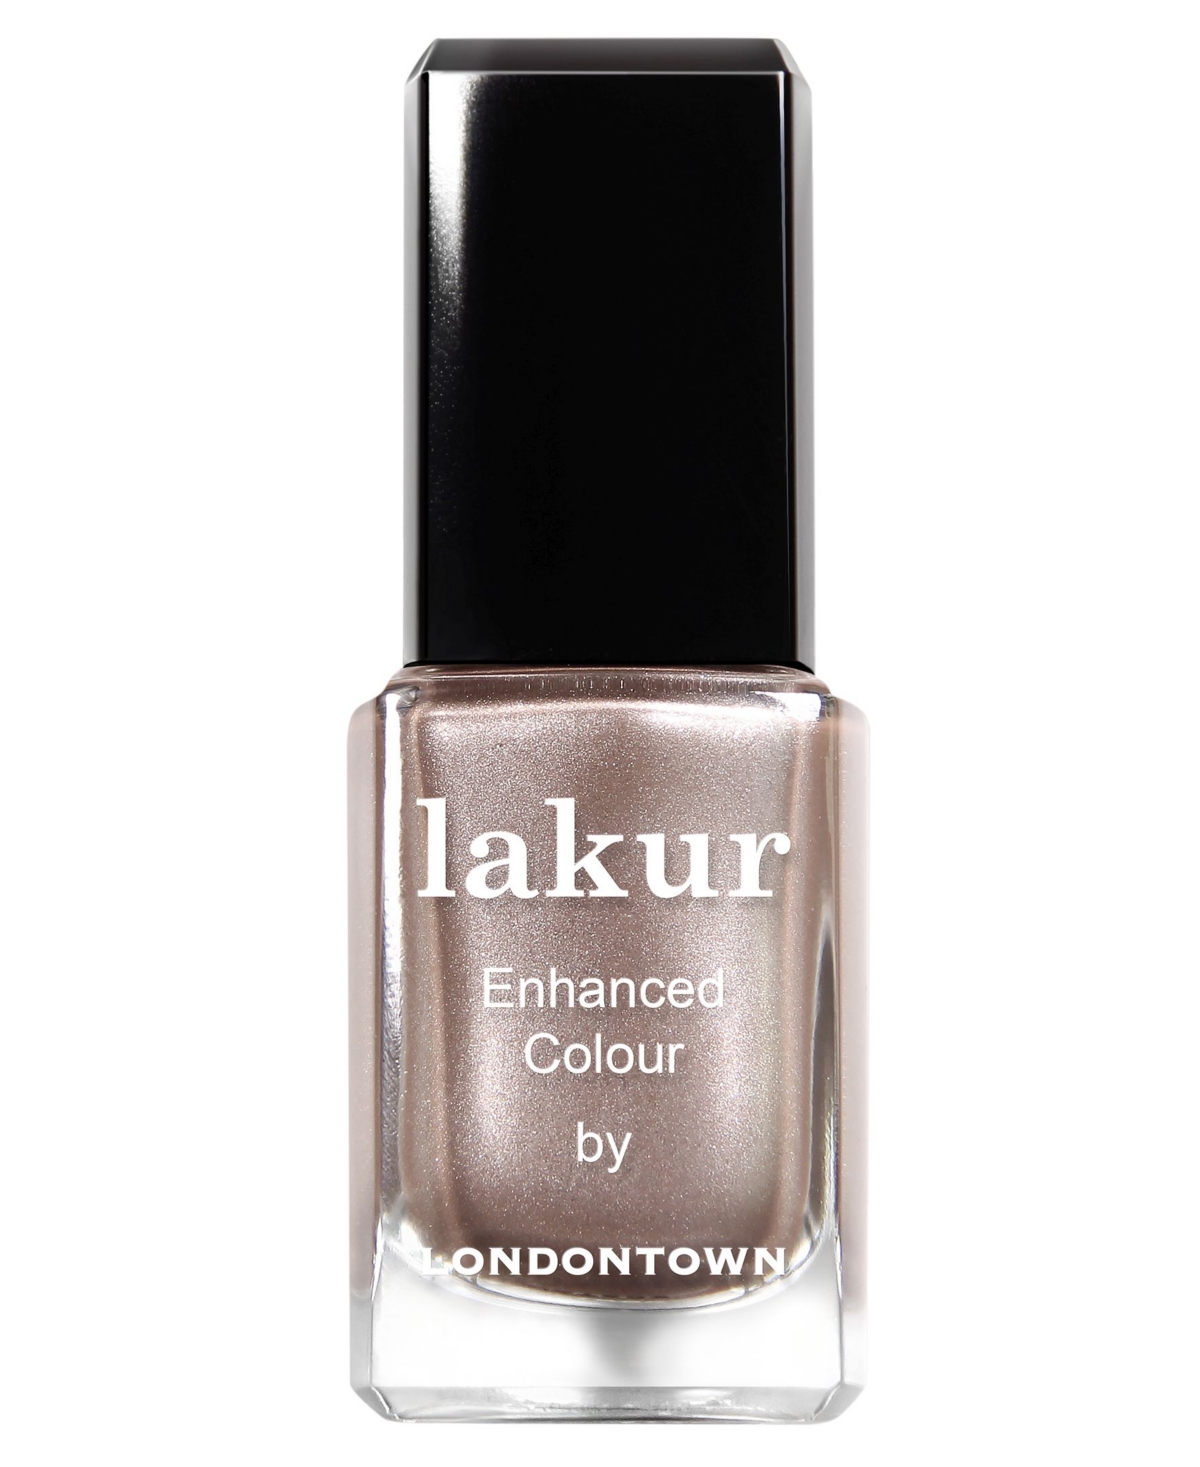 Londontown Lakur Enhanced Color Nail Polish, 0.4 oz